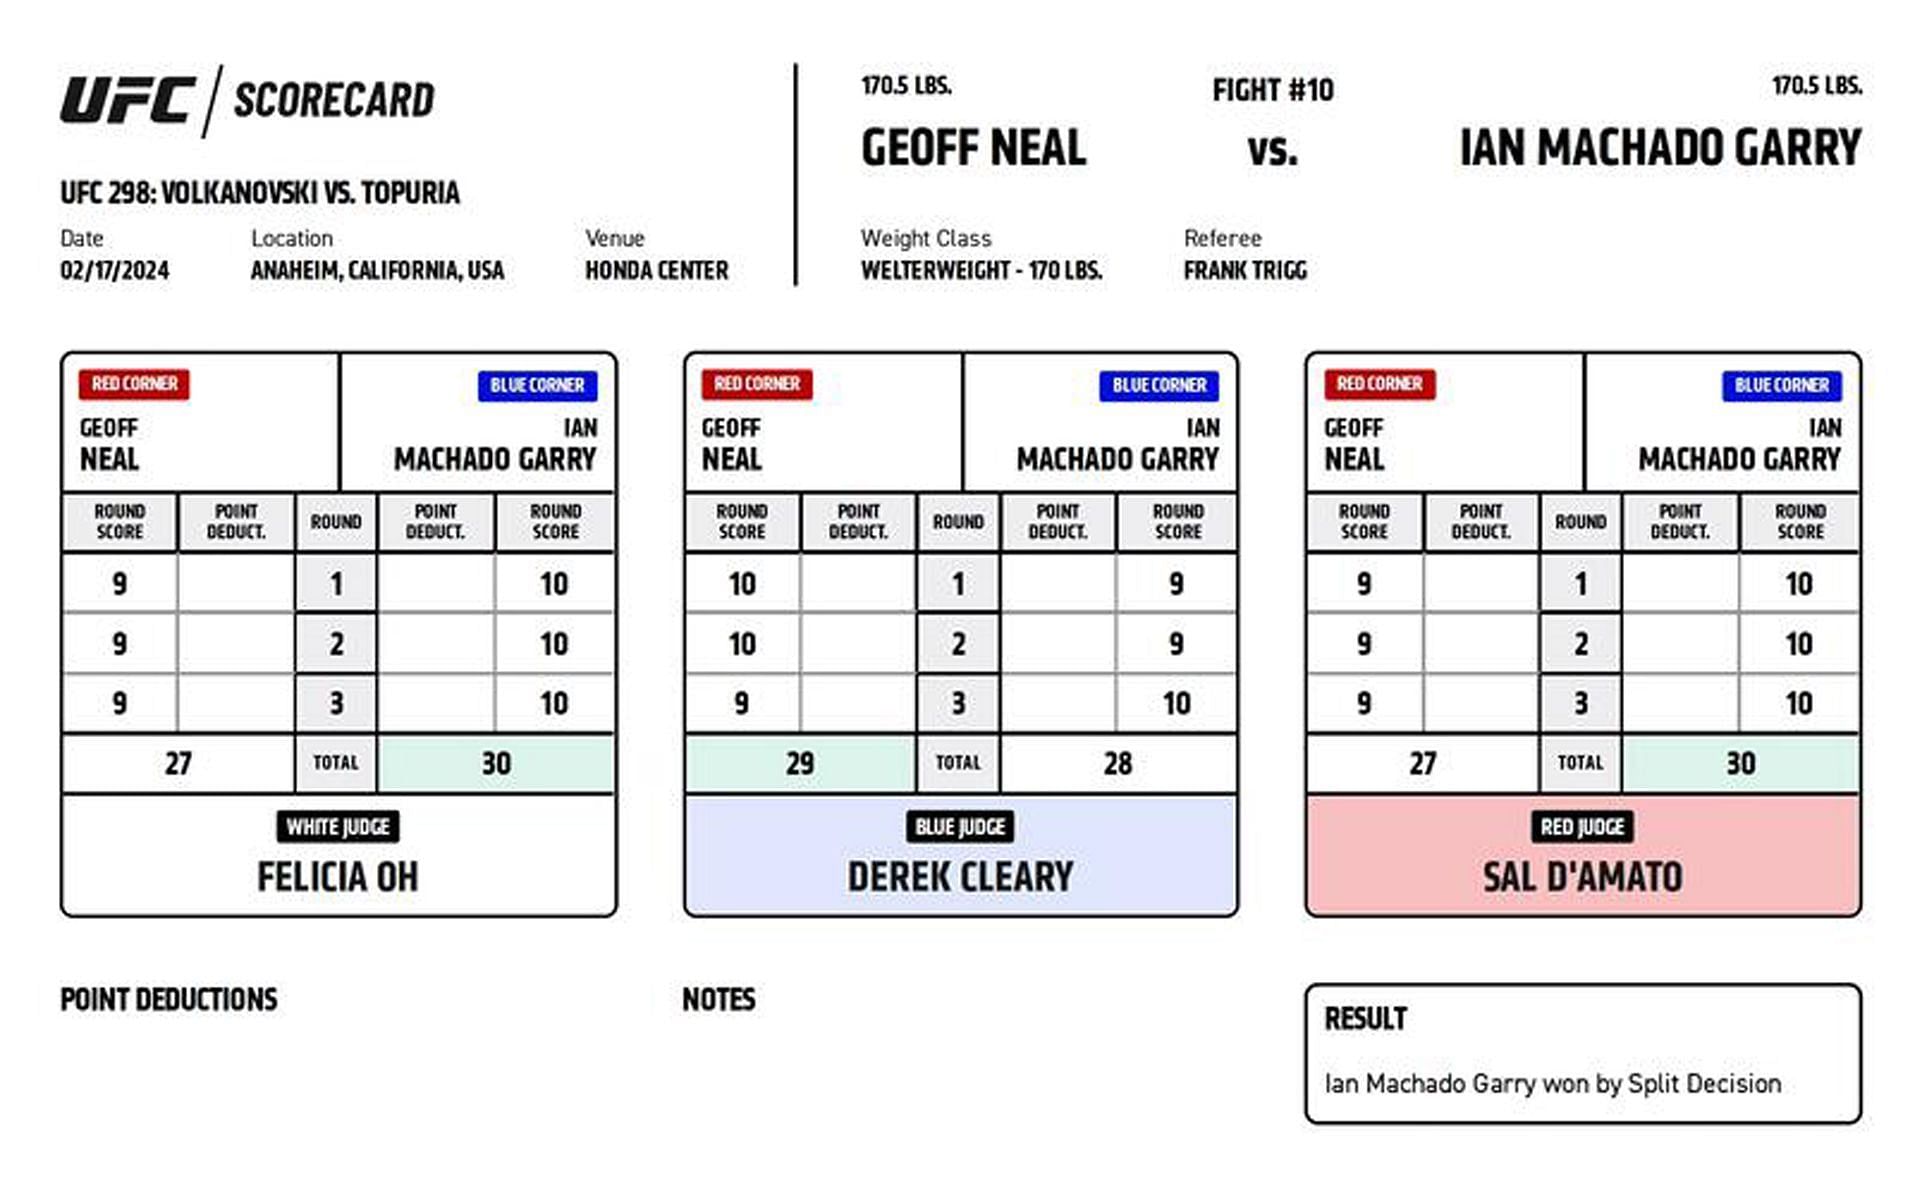 Ian Machado Garry def. Geoff Neal via split decision (30-27 X 2, 28-29)